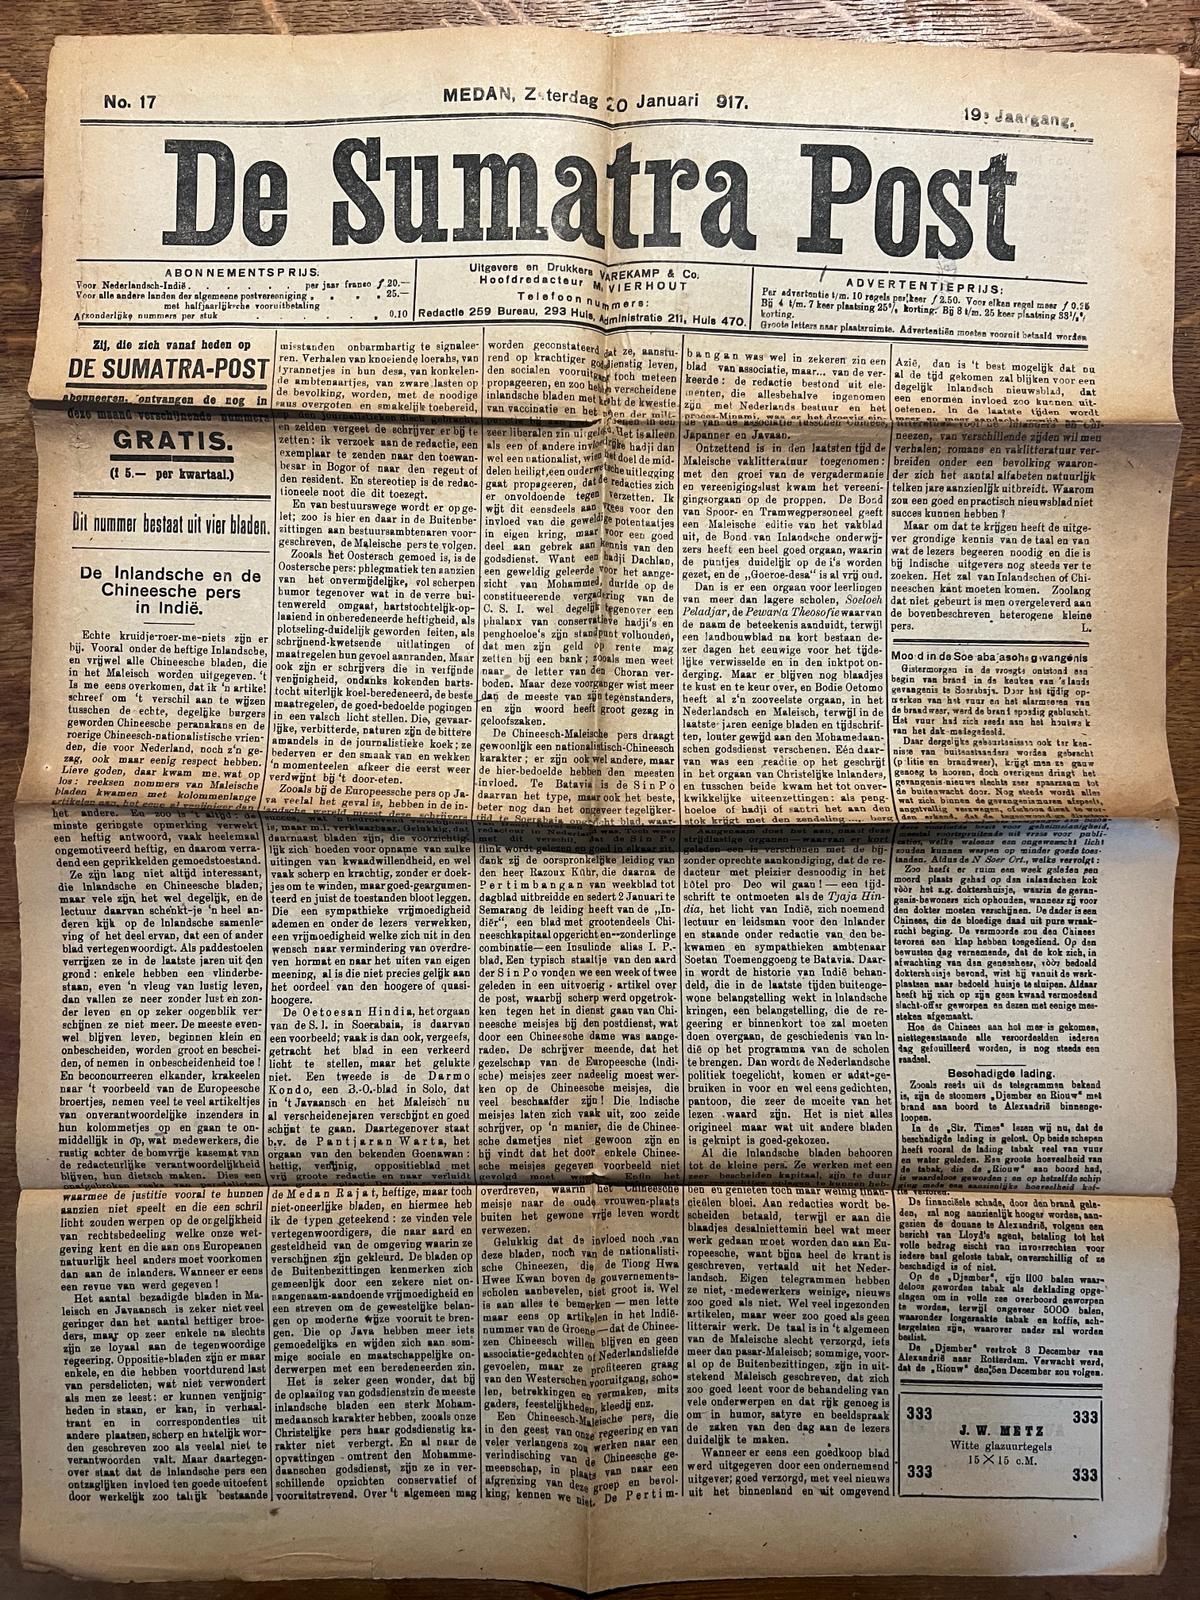 [Printed press history] - Antique newspaper Indonesia, Indi 1917 | The Sumatra Post, Medan zaterdag 20 januari 1917, 1 p. AND various curious newspaper articles.